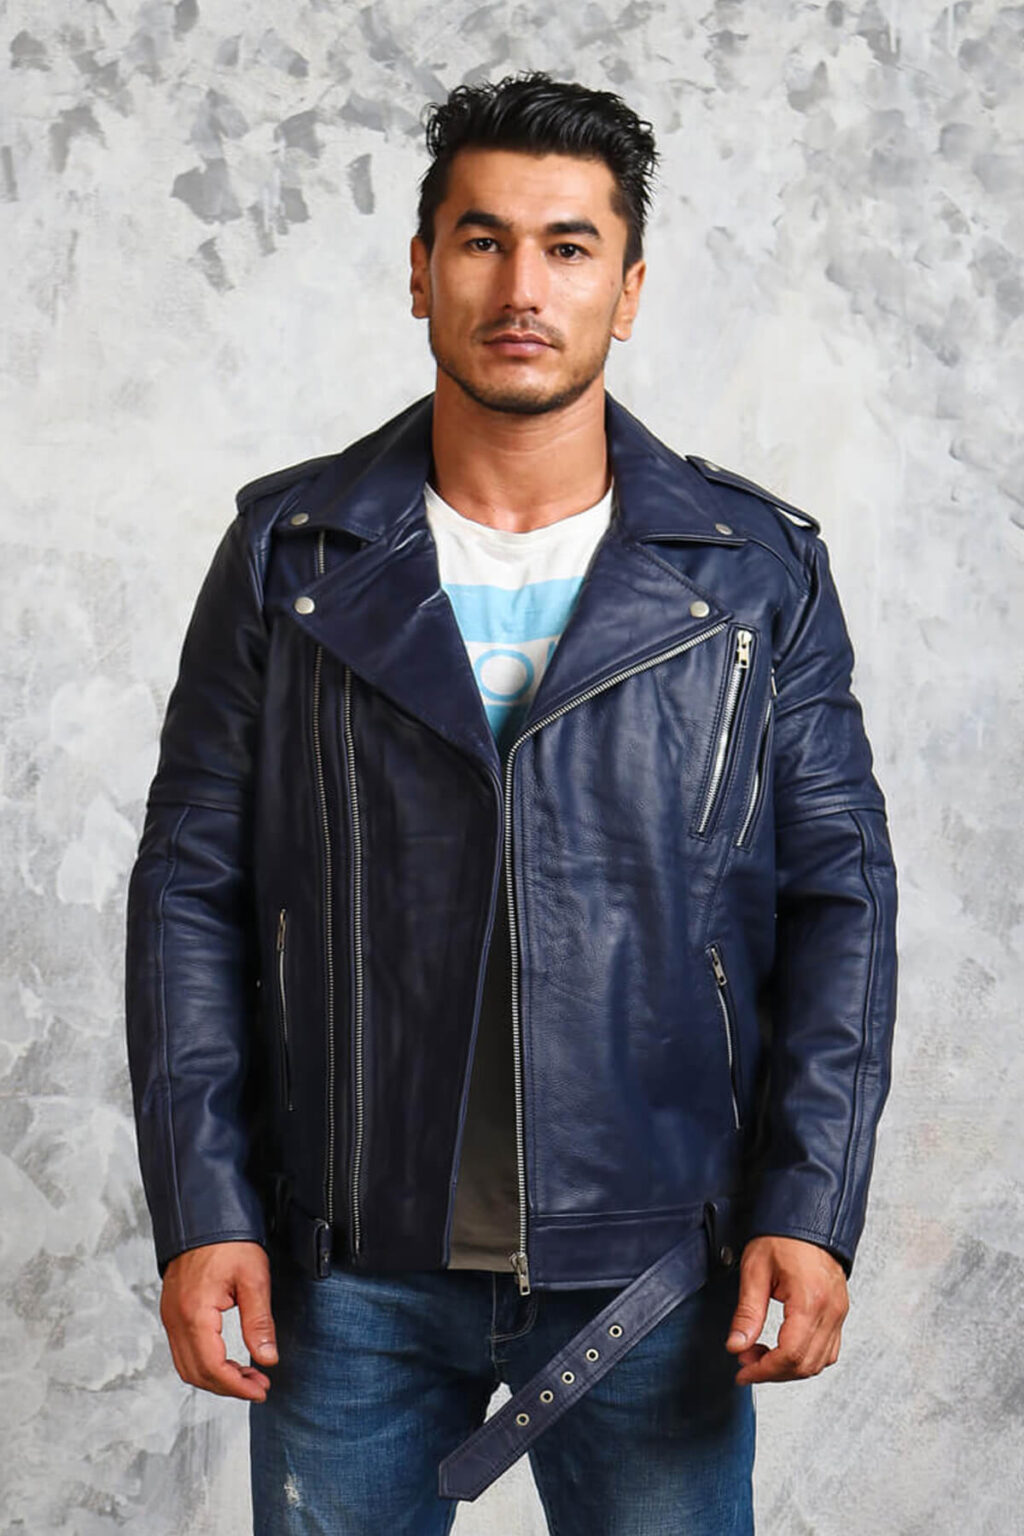 Blue Leather Jacket for Men - Blue Motorcycle Jacket